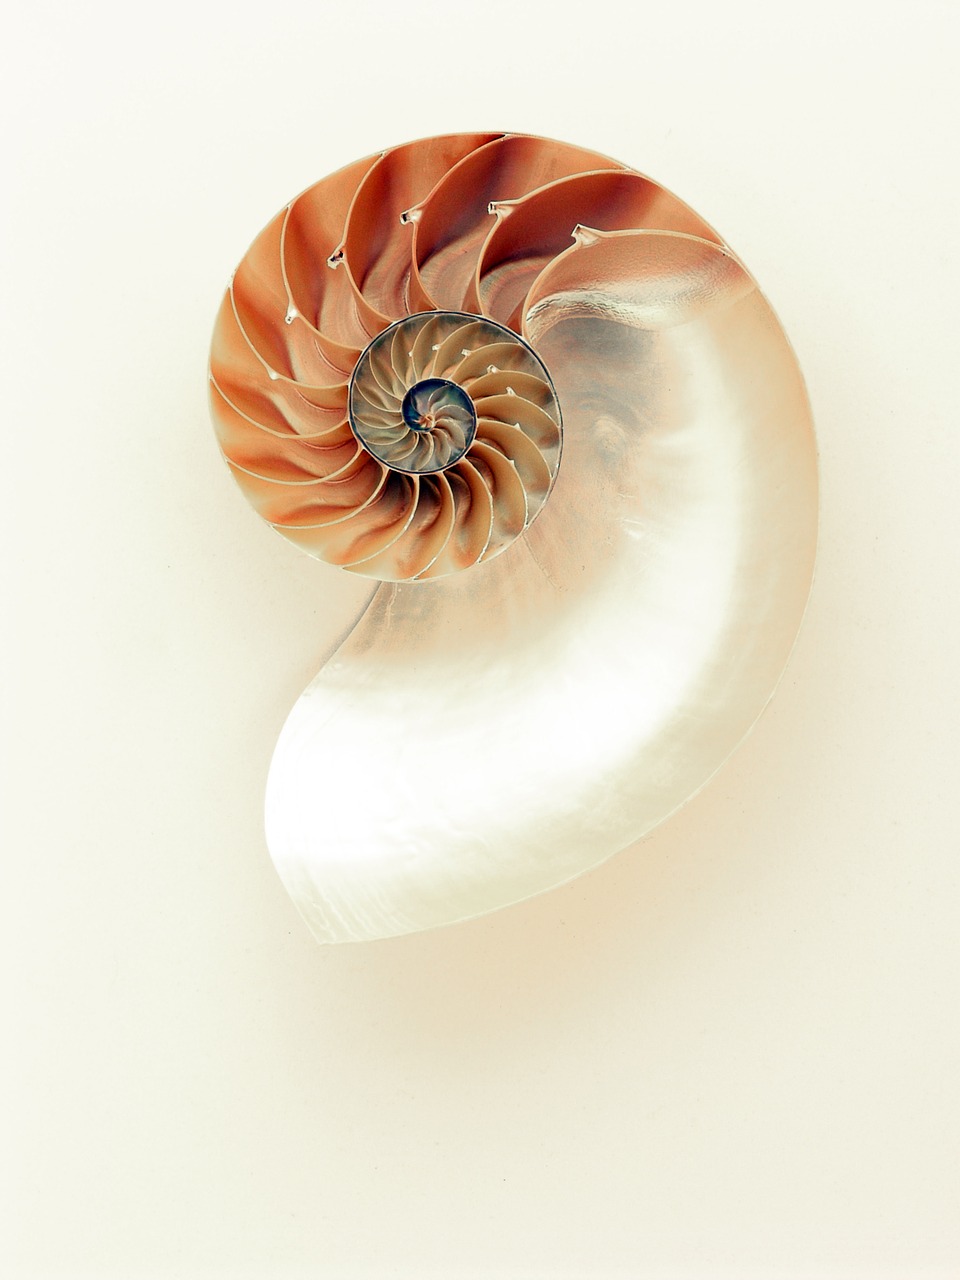 nautilus shell shimmer free photo